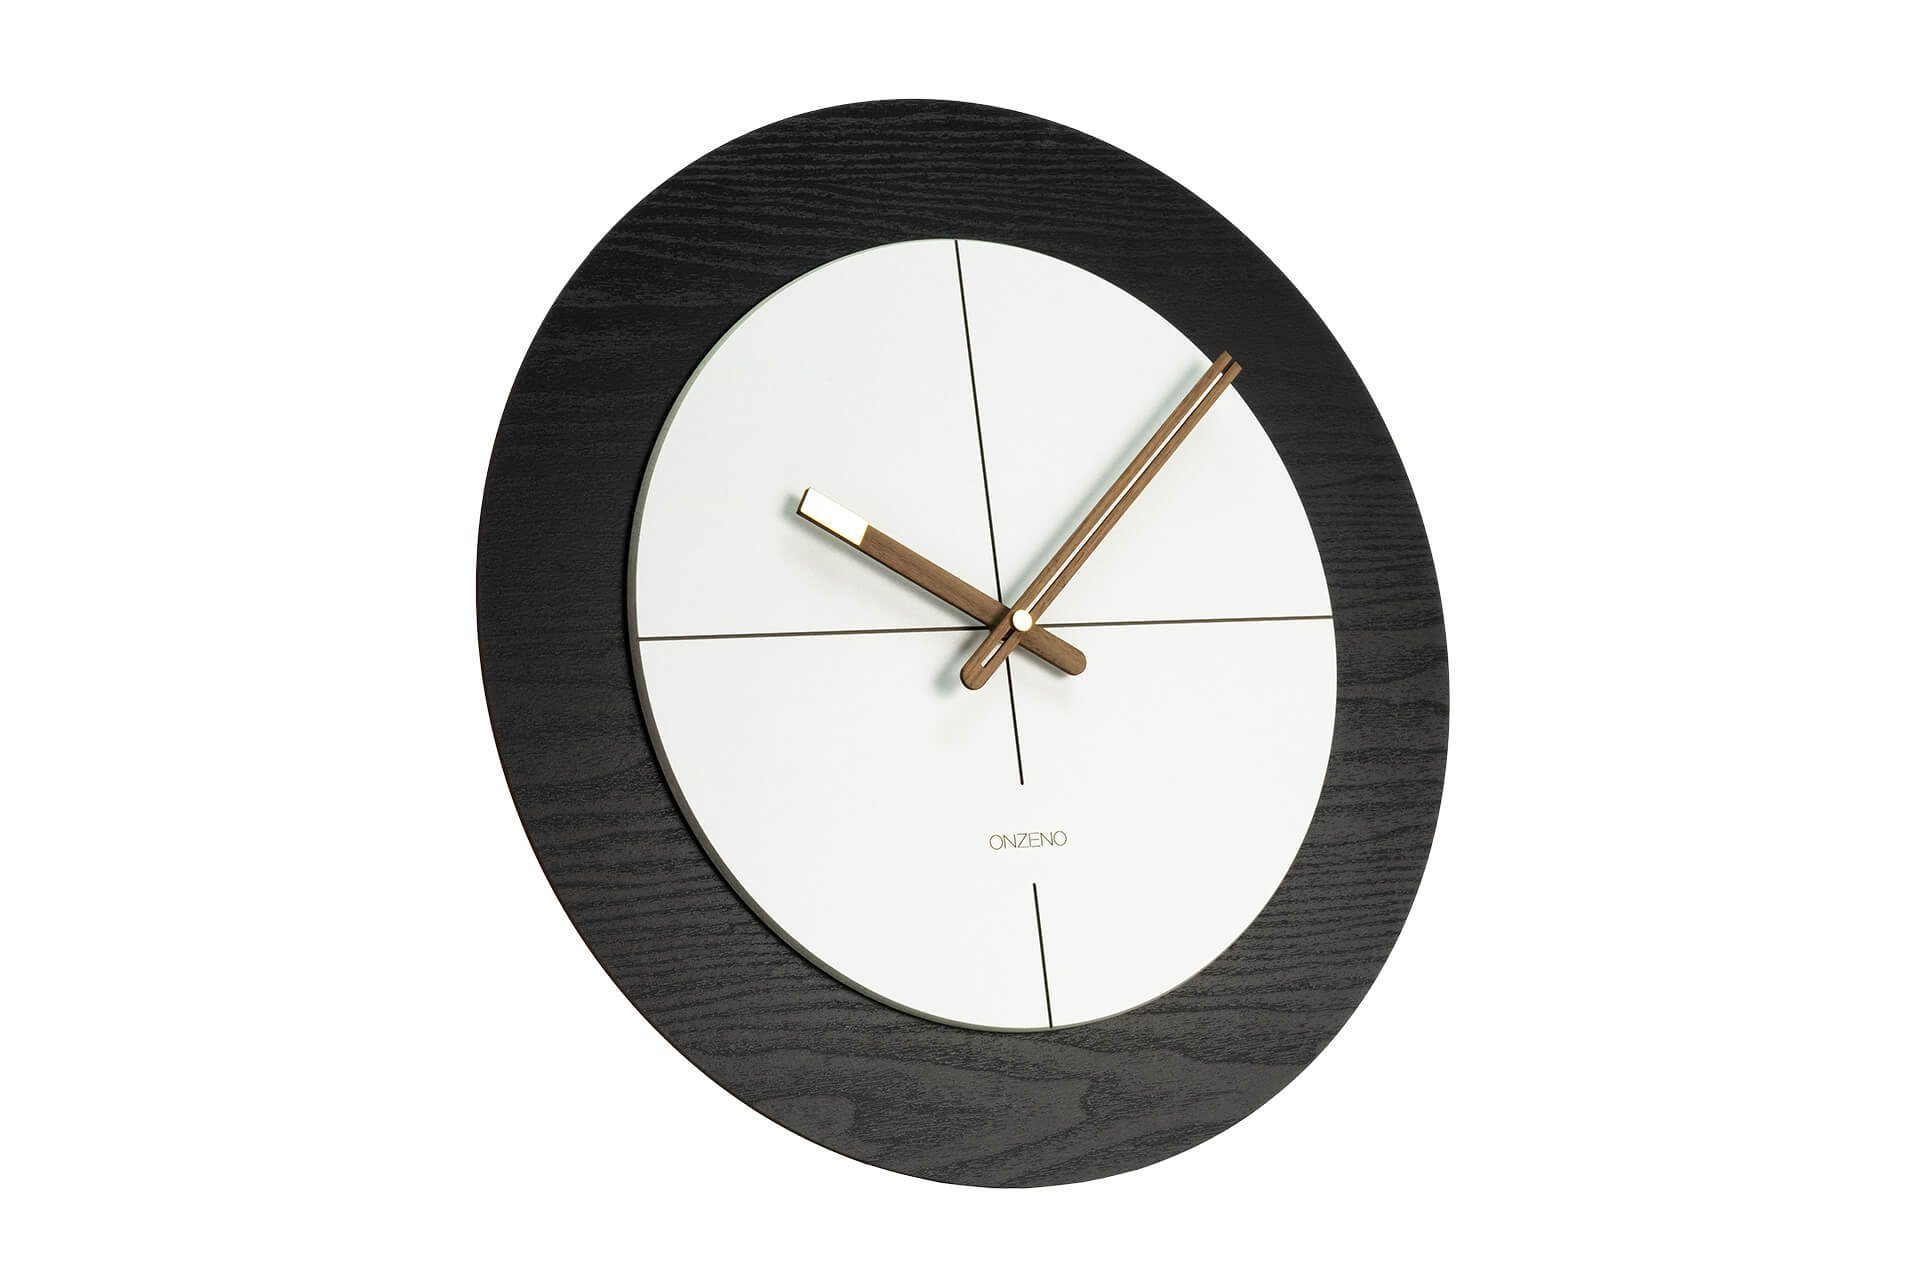 (handgefertigte ONZENO Wanduhr CONFIDENT. THE Design-Uhr) 40x40x0.9 cm